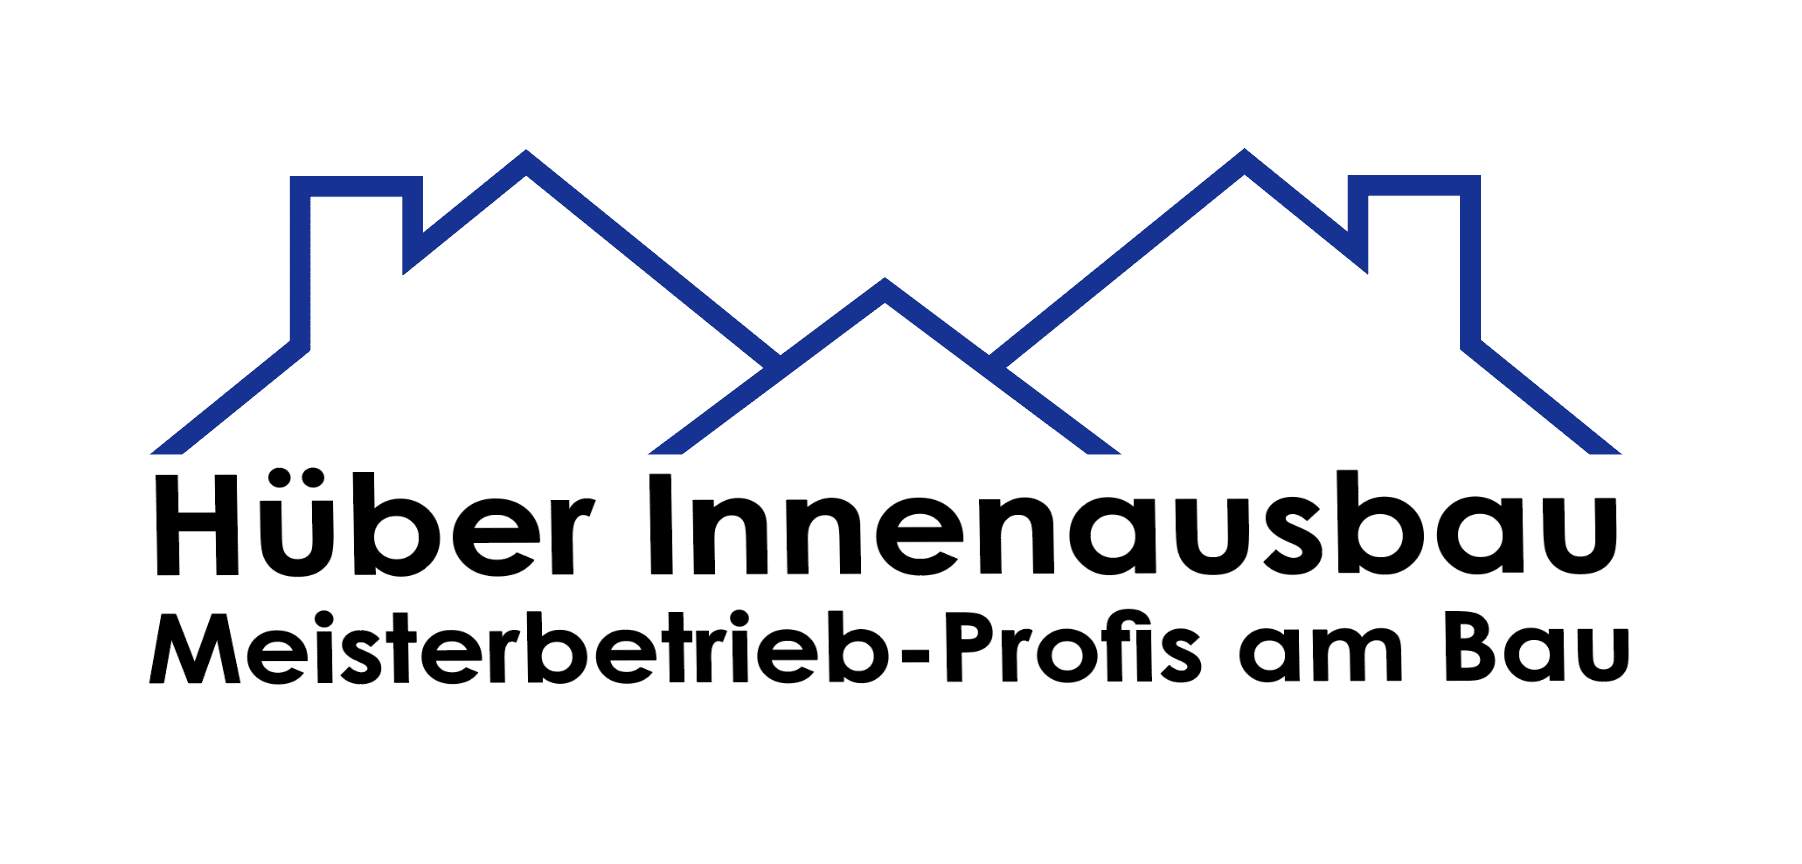 Hüber Innenausbau - Logo